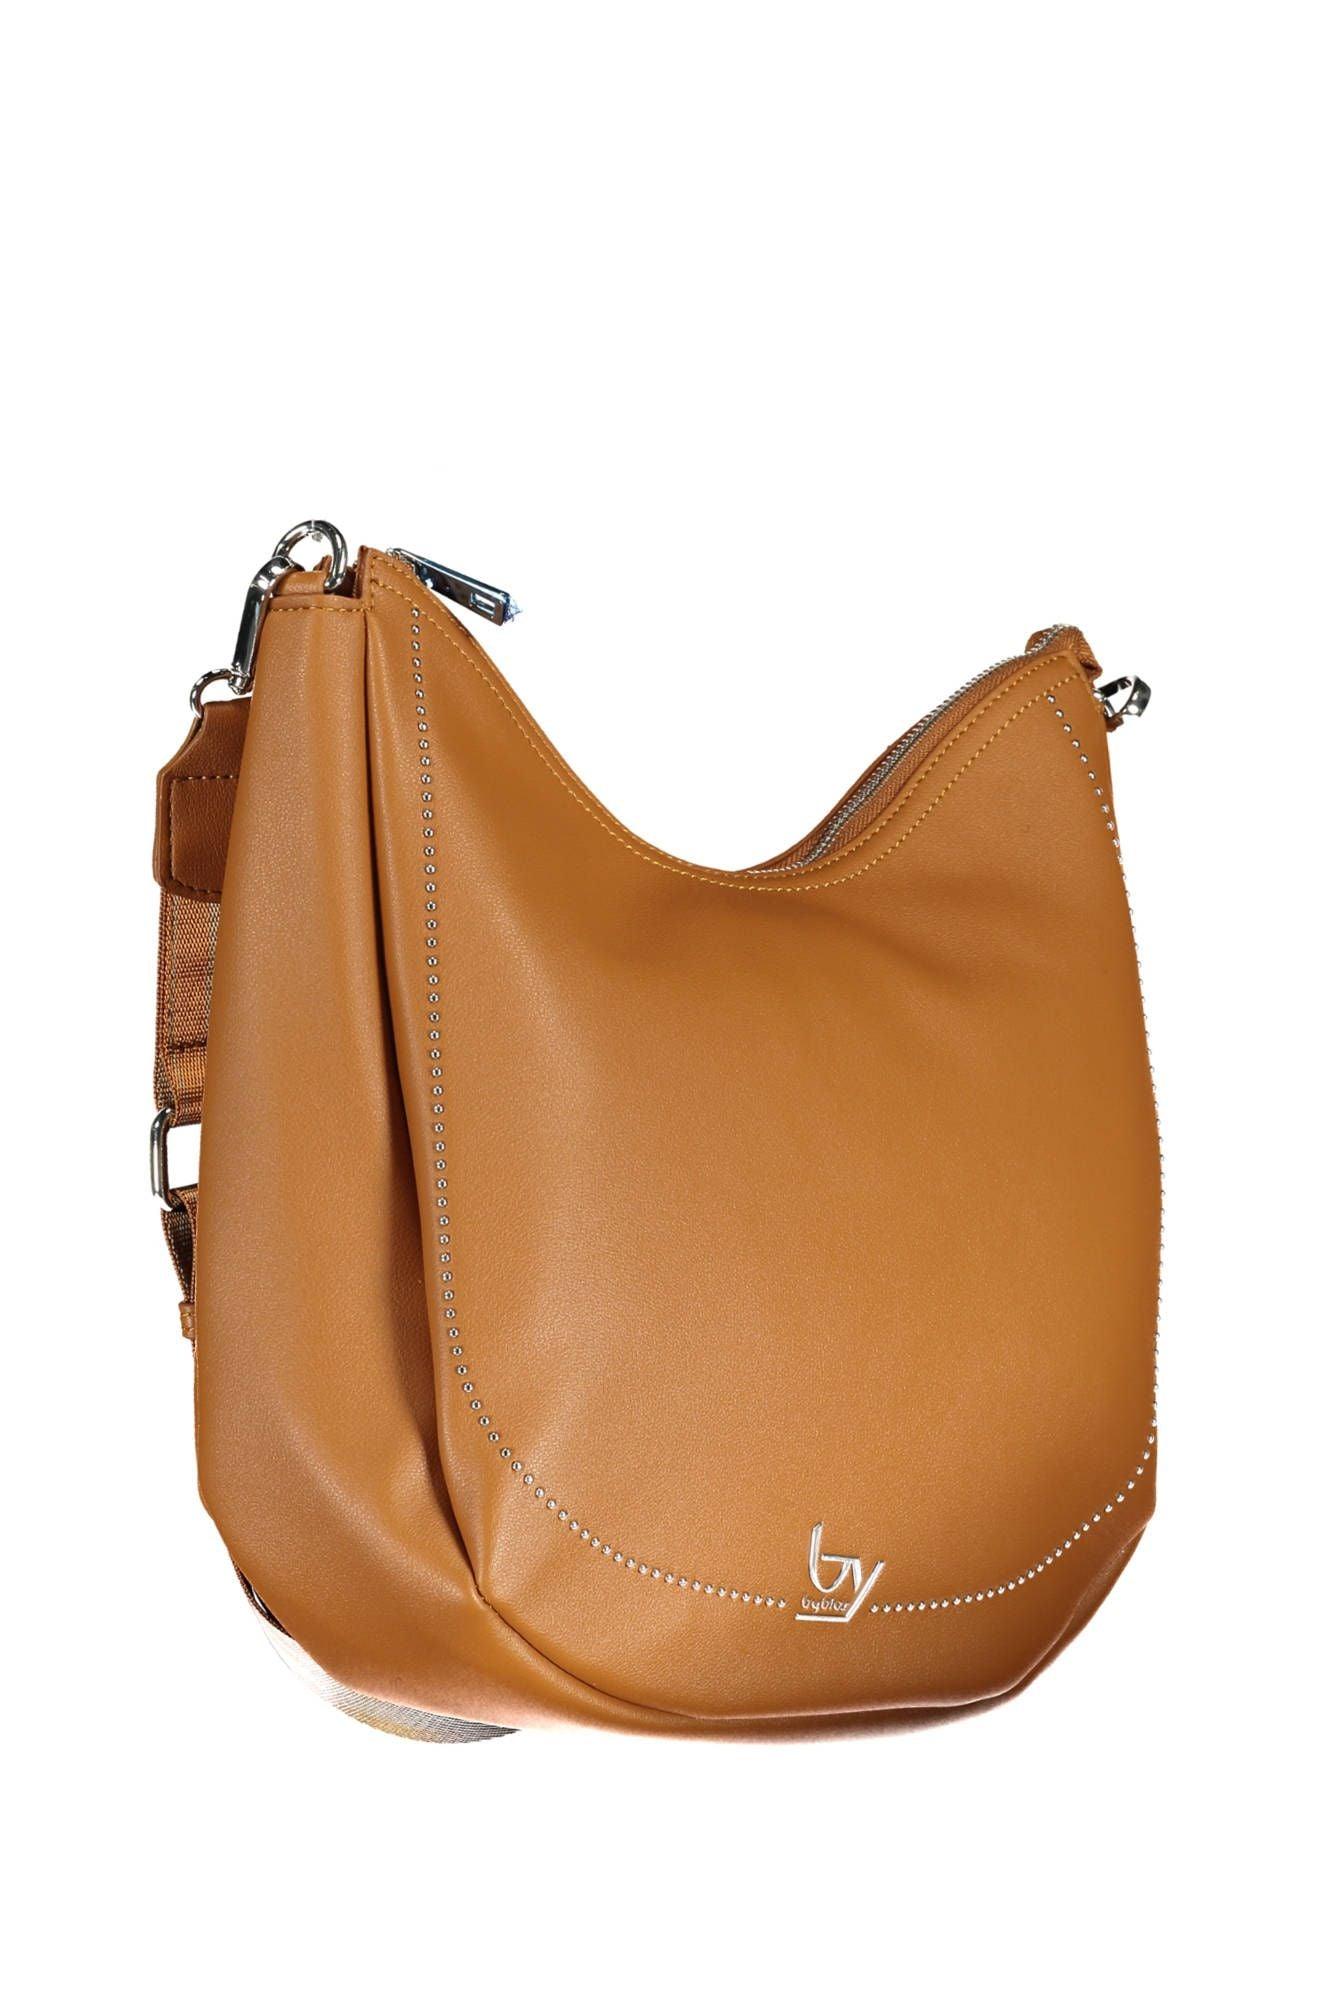 BYBLOS Chic Brown Handbag with Contrasting Details - PER.FASHION